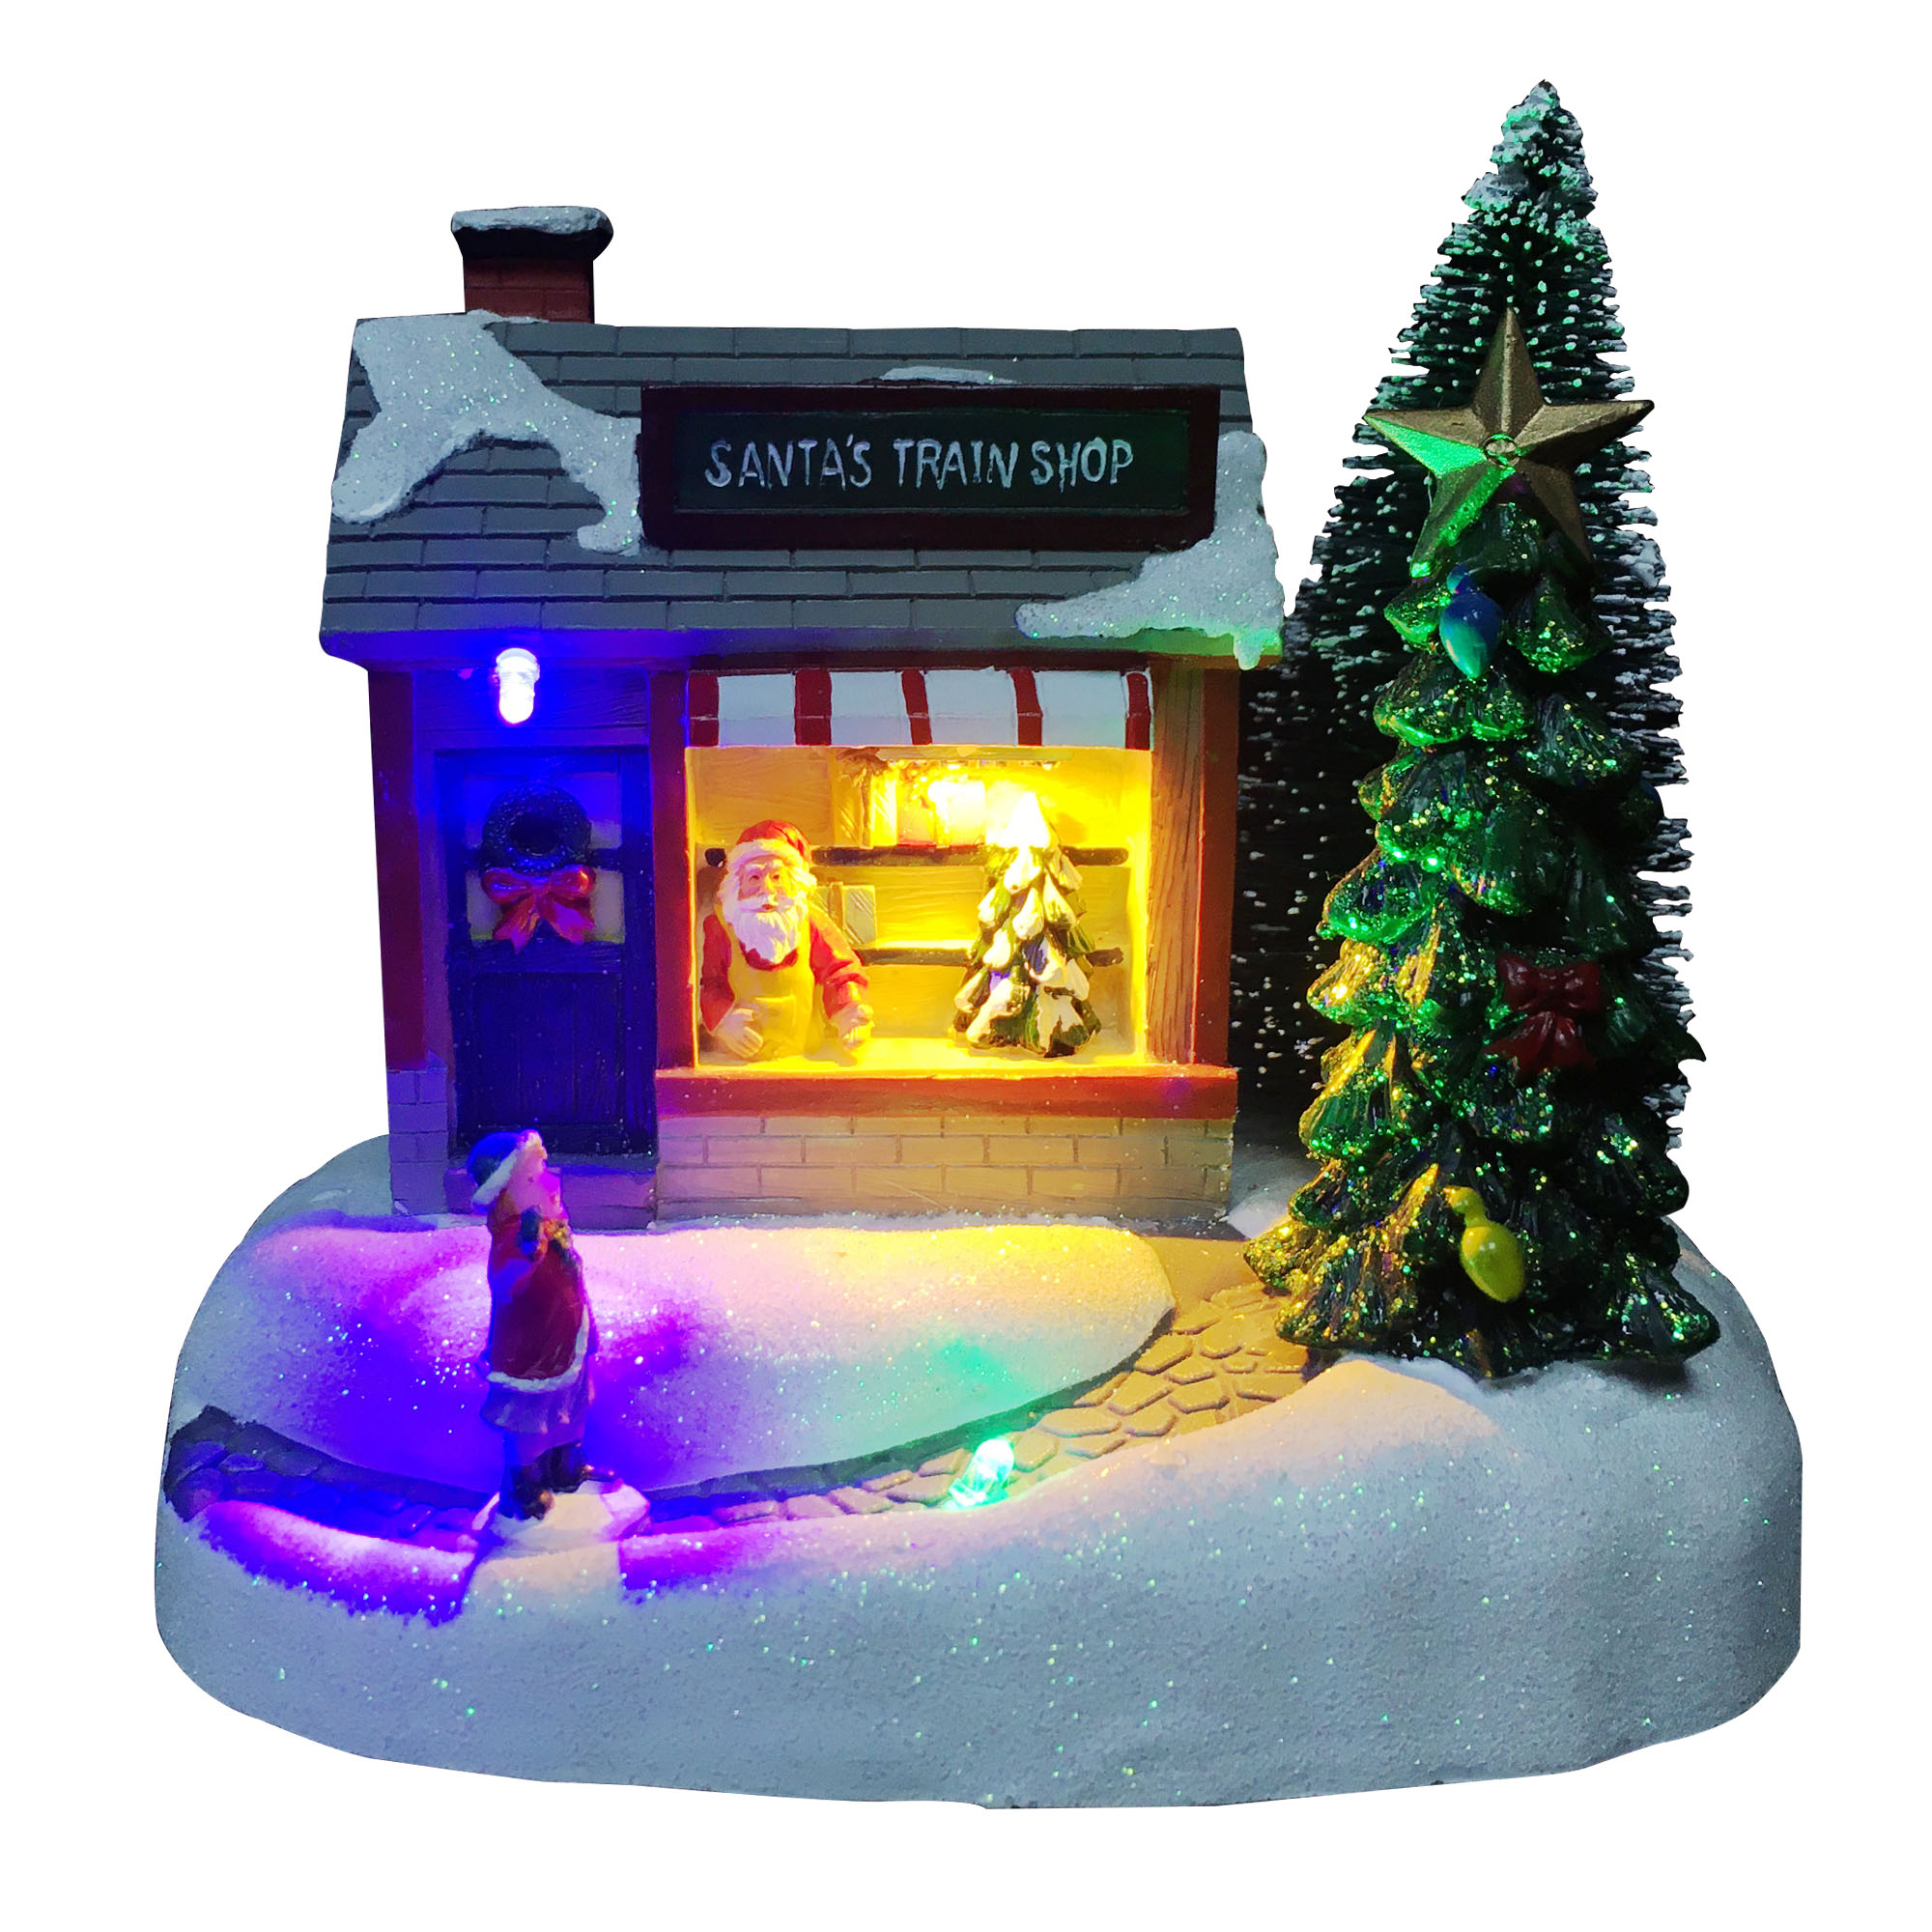 100% Original Christmas Village And Train Set - Melody colorful Xmas village Christmas Decoration Santa’s Train Shop scene led lighted Christmas house – Melody